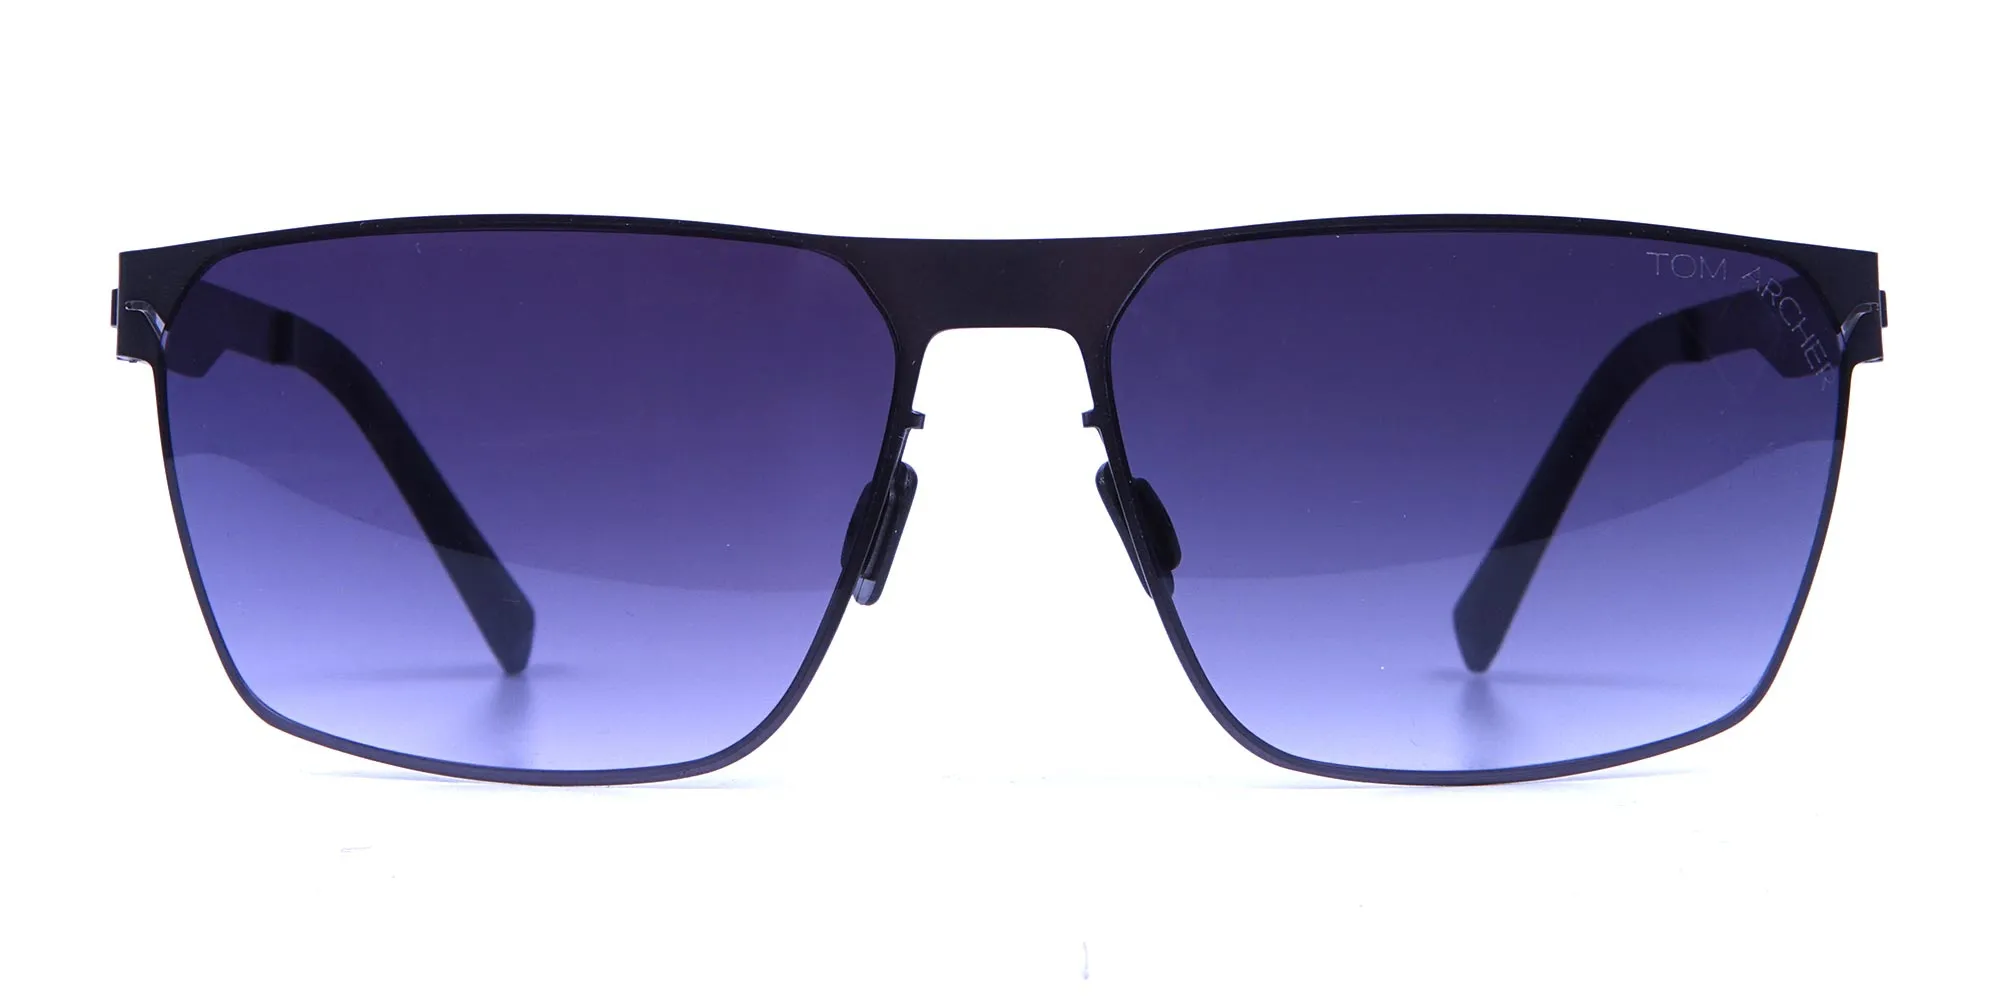 Smoky Gunmetal Rectangular Sunglasses -1